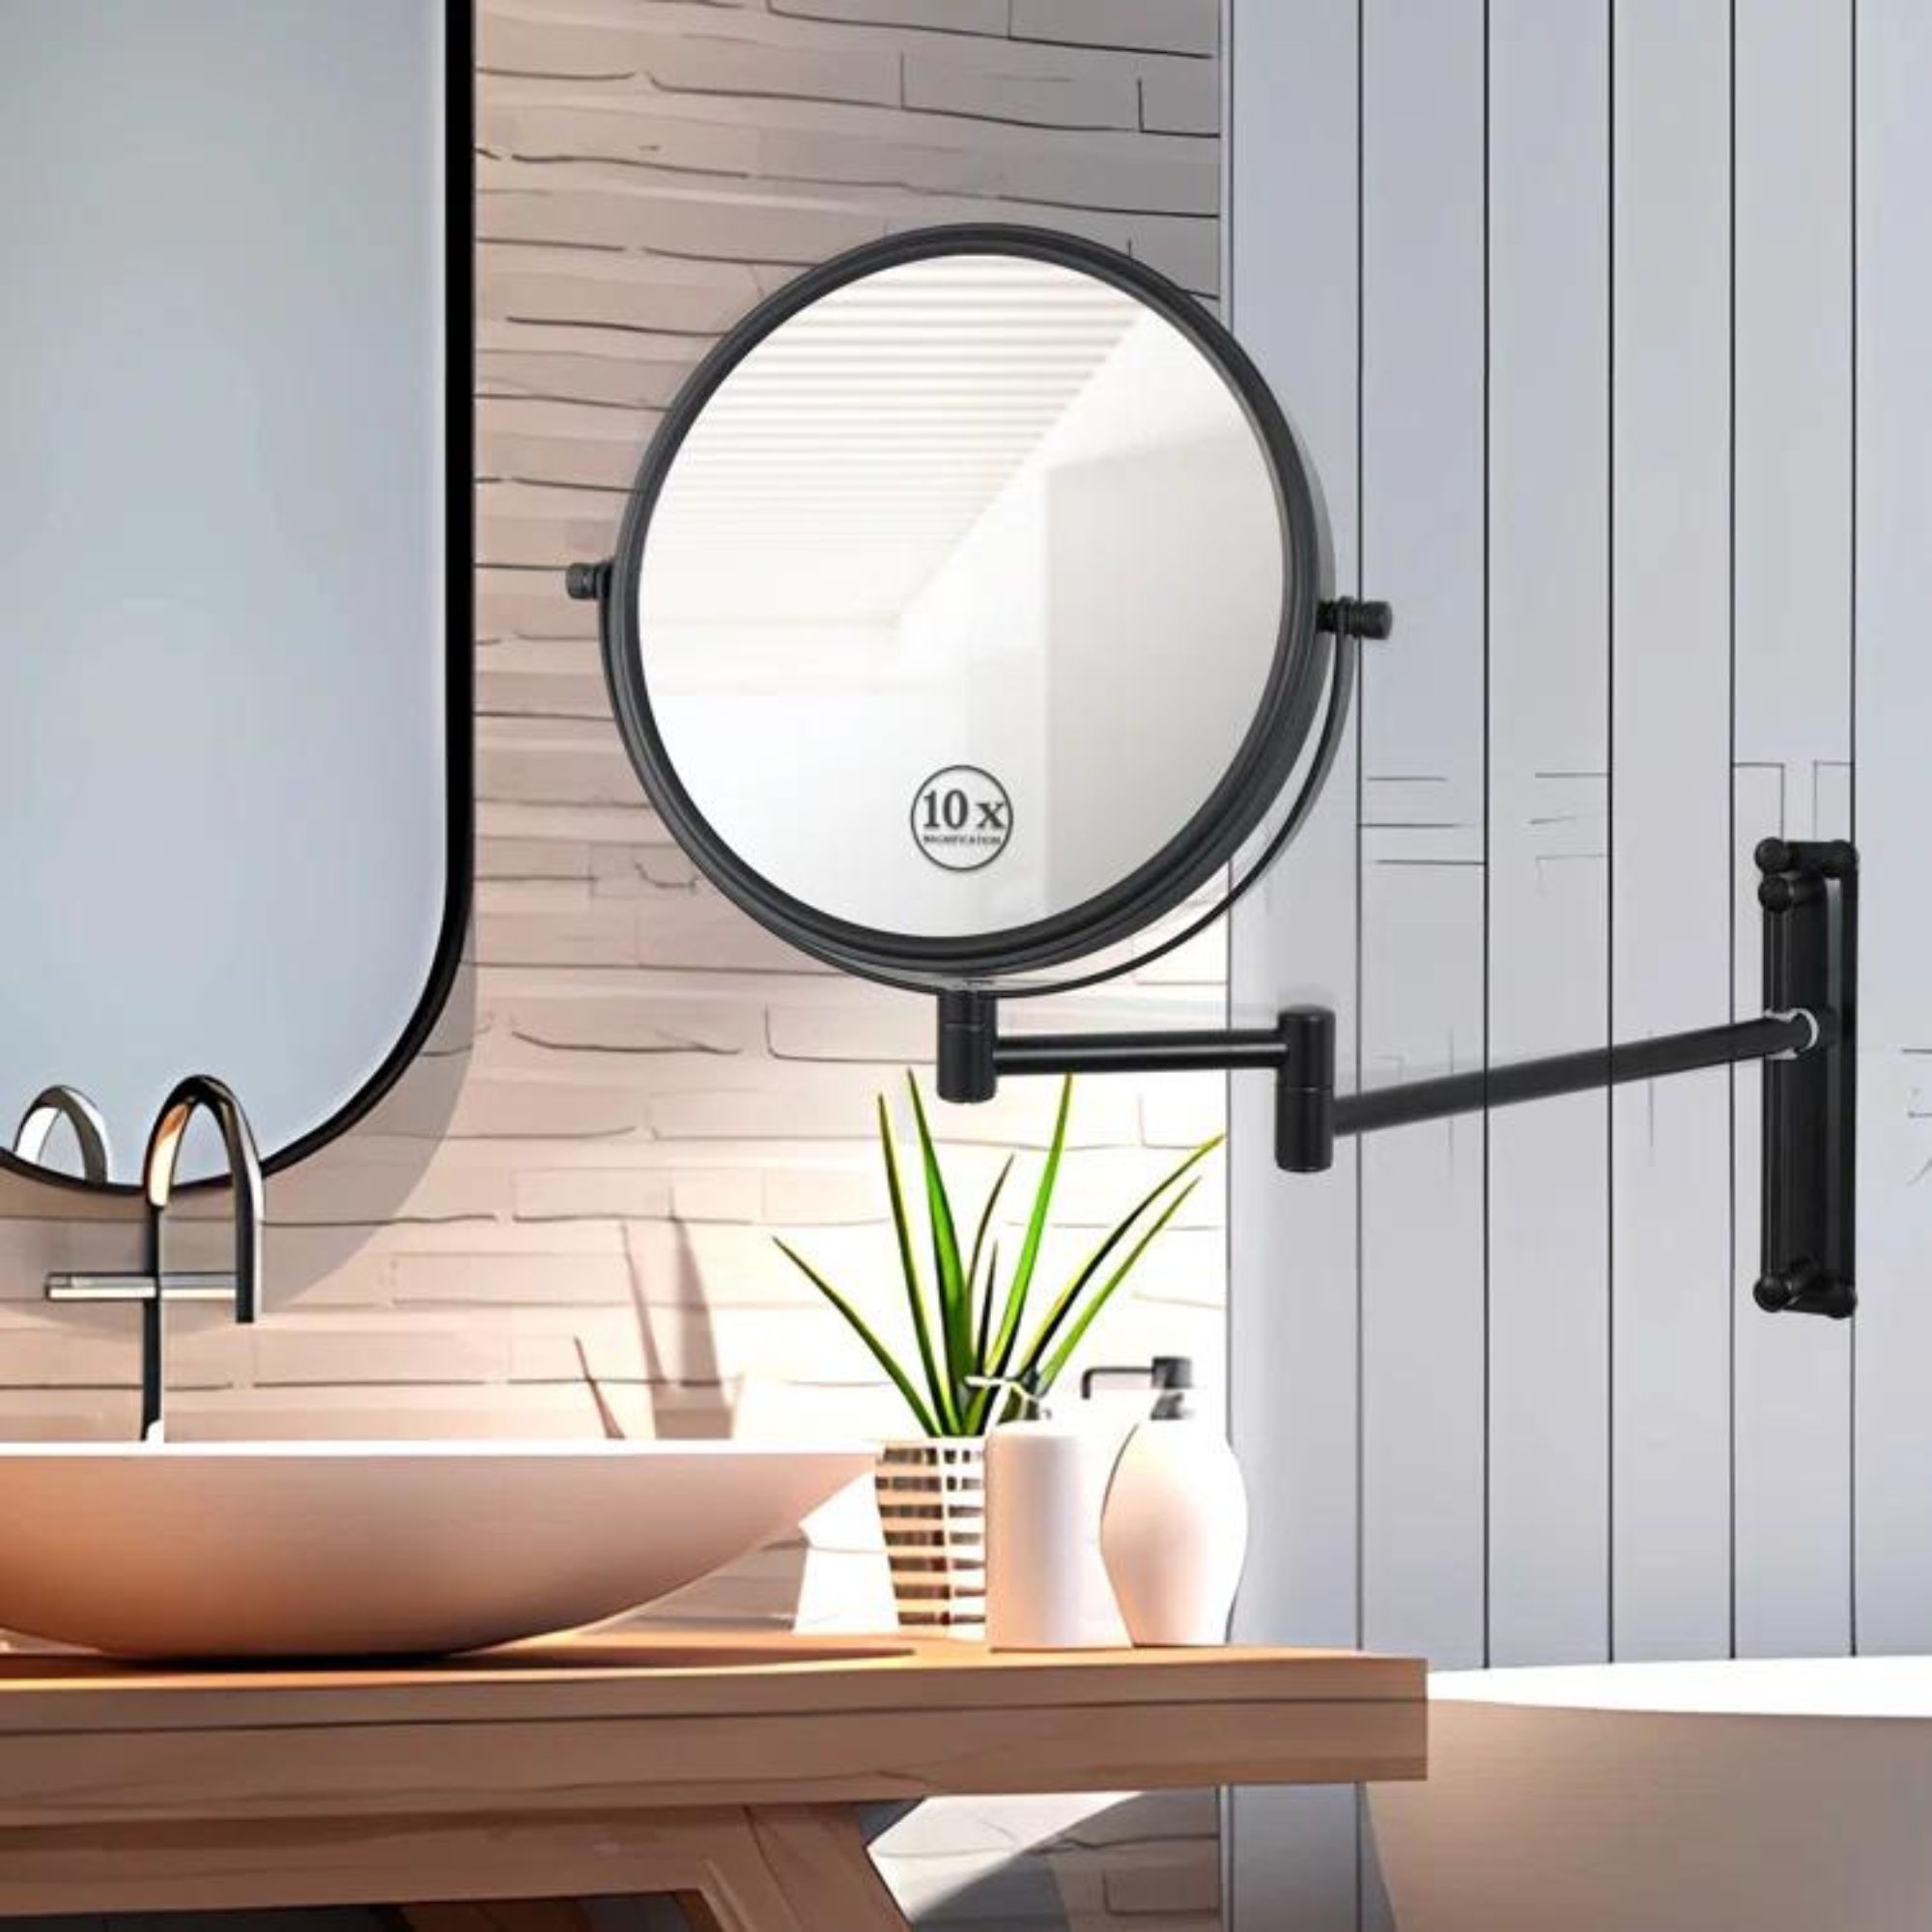 An extendable mirror next to a bathroom sink